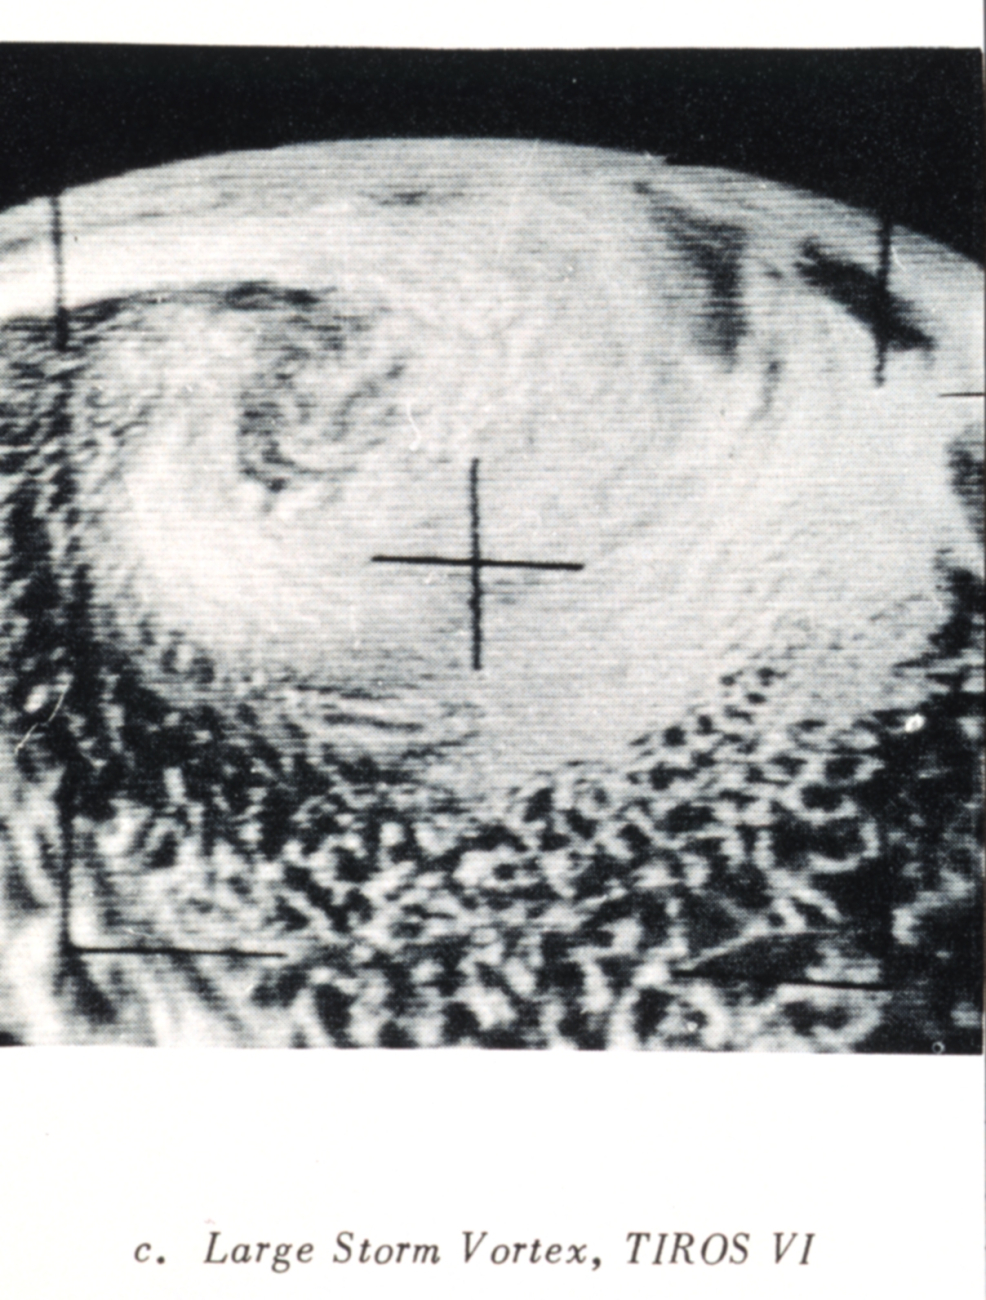 A large storm vortex imaged by TIROS VI